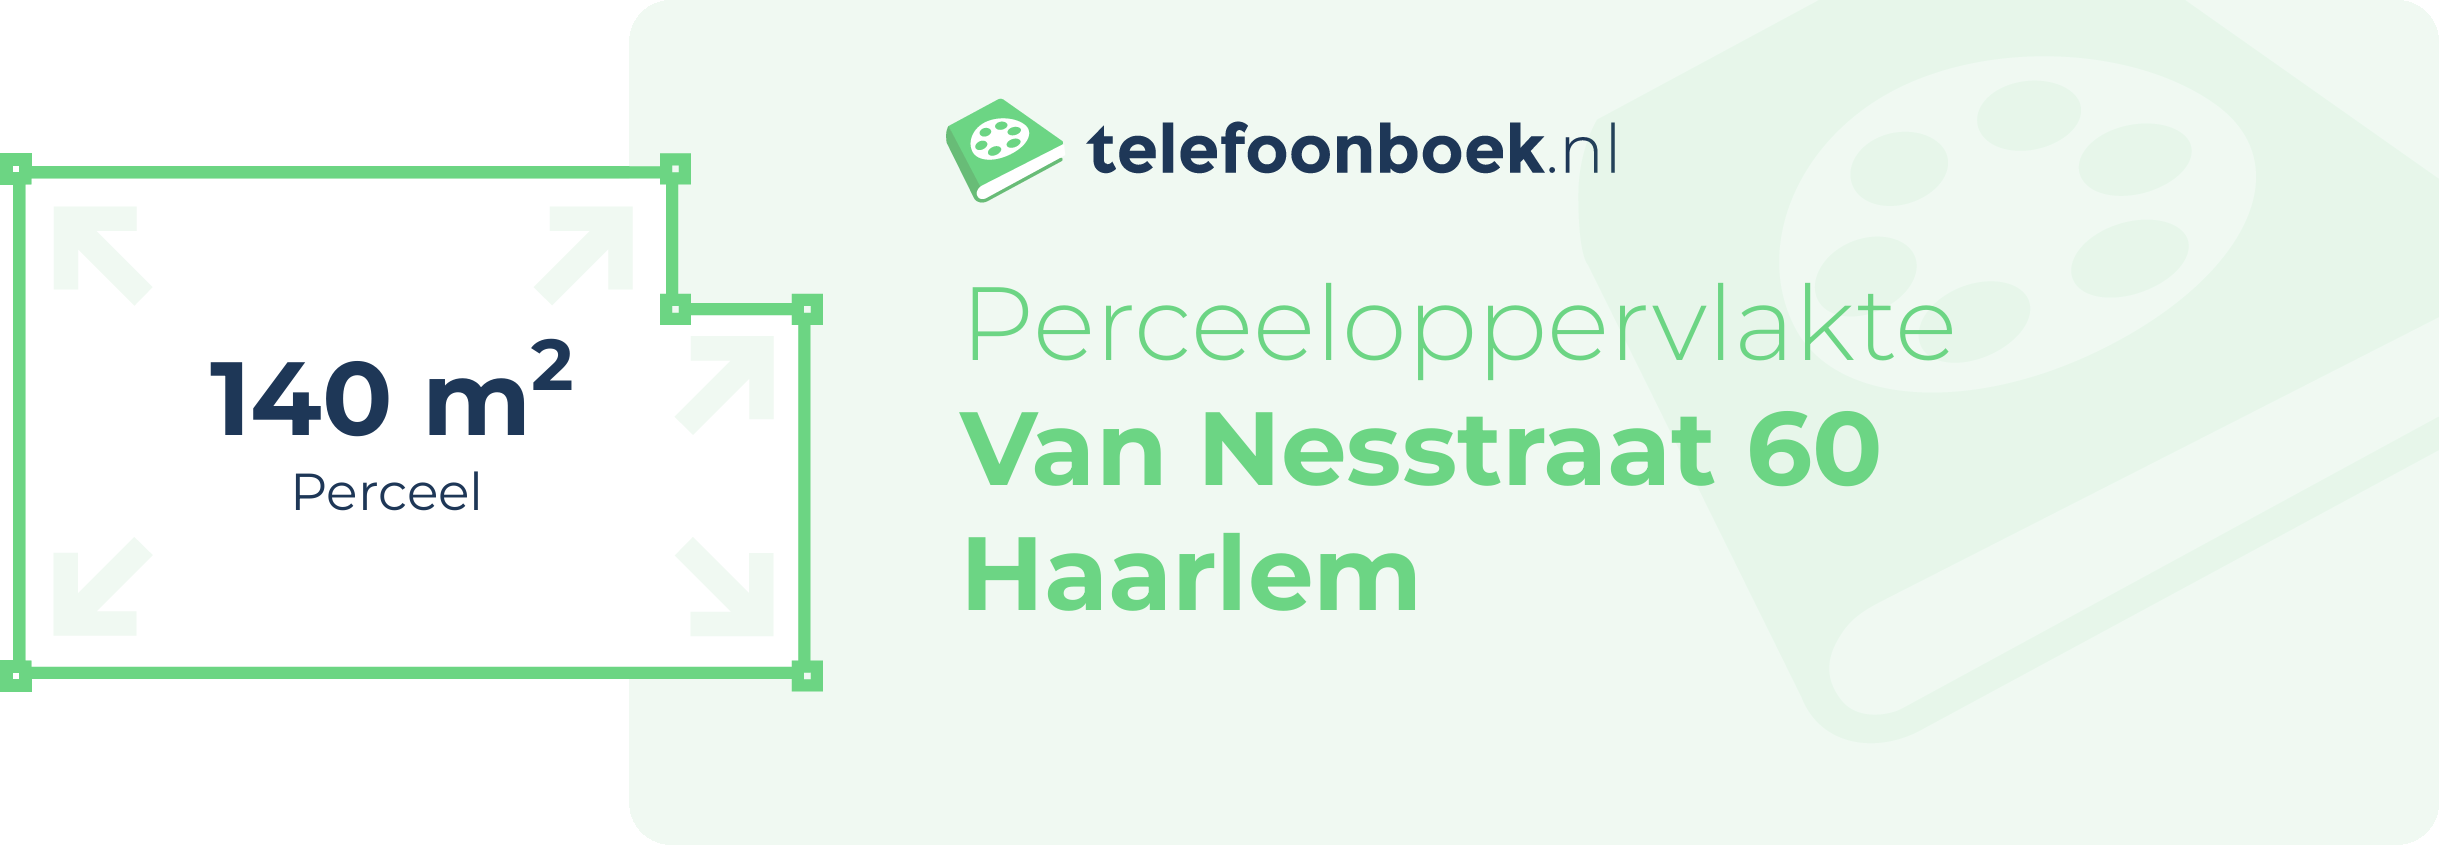 Perceeloppervlakte Van Nesstraat 60 Haarlem